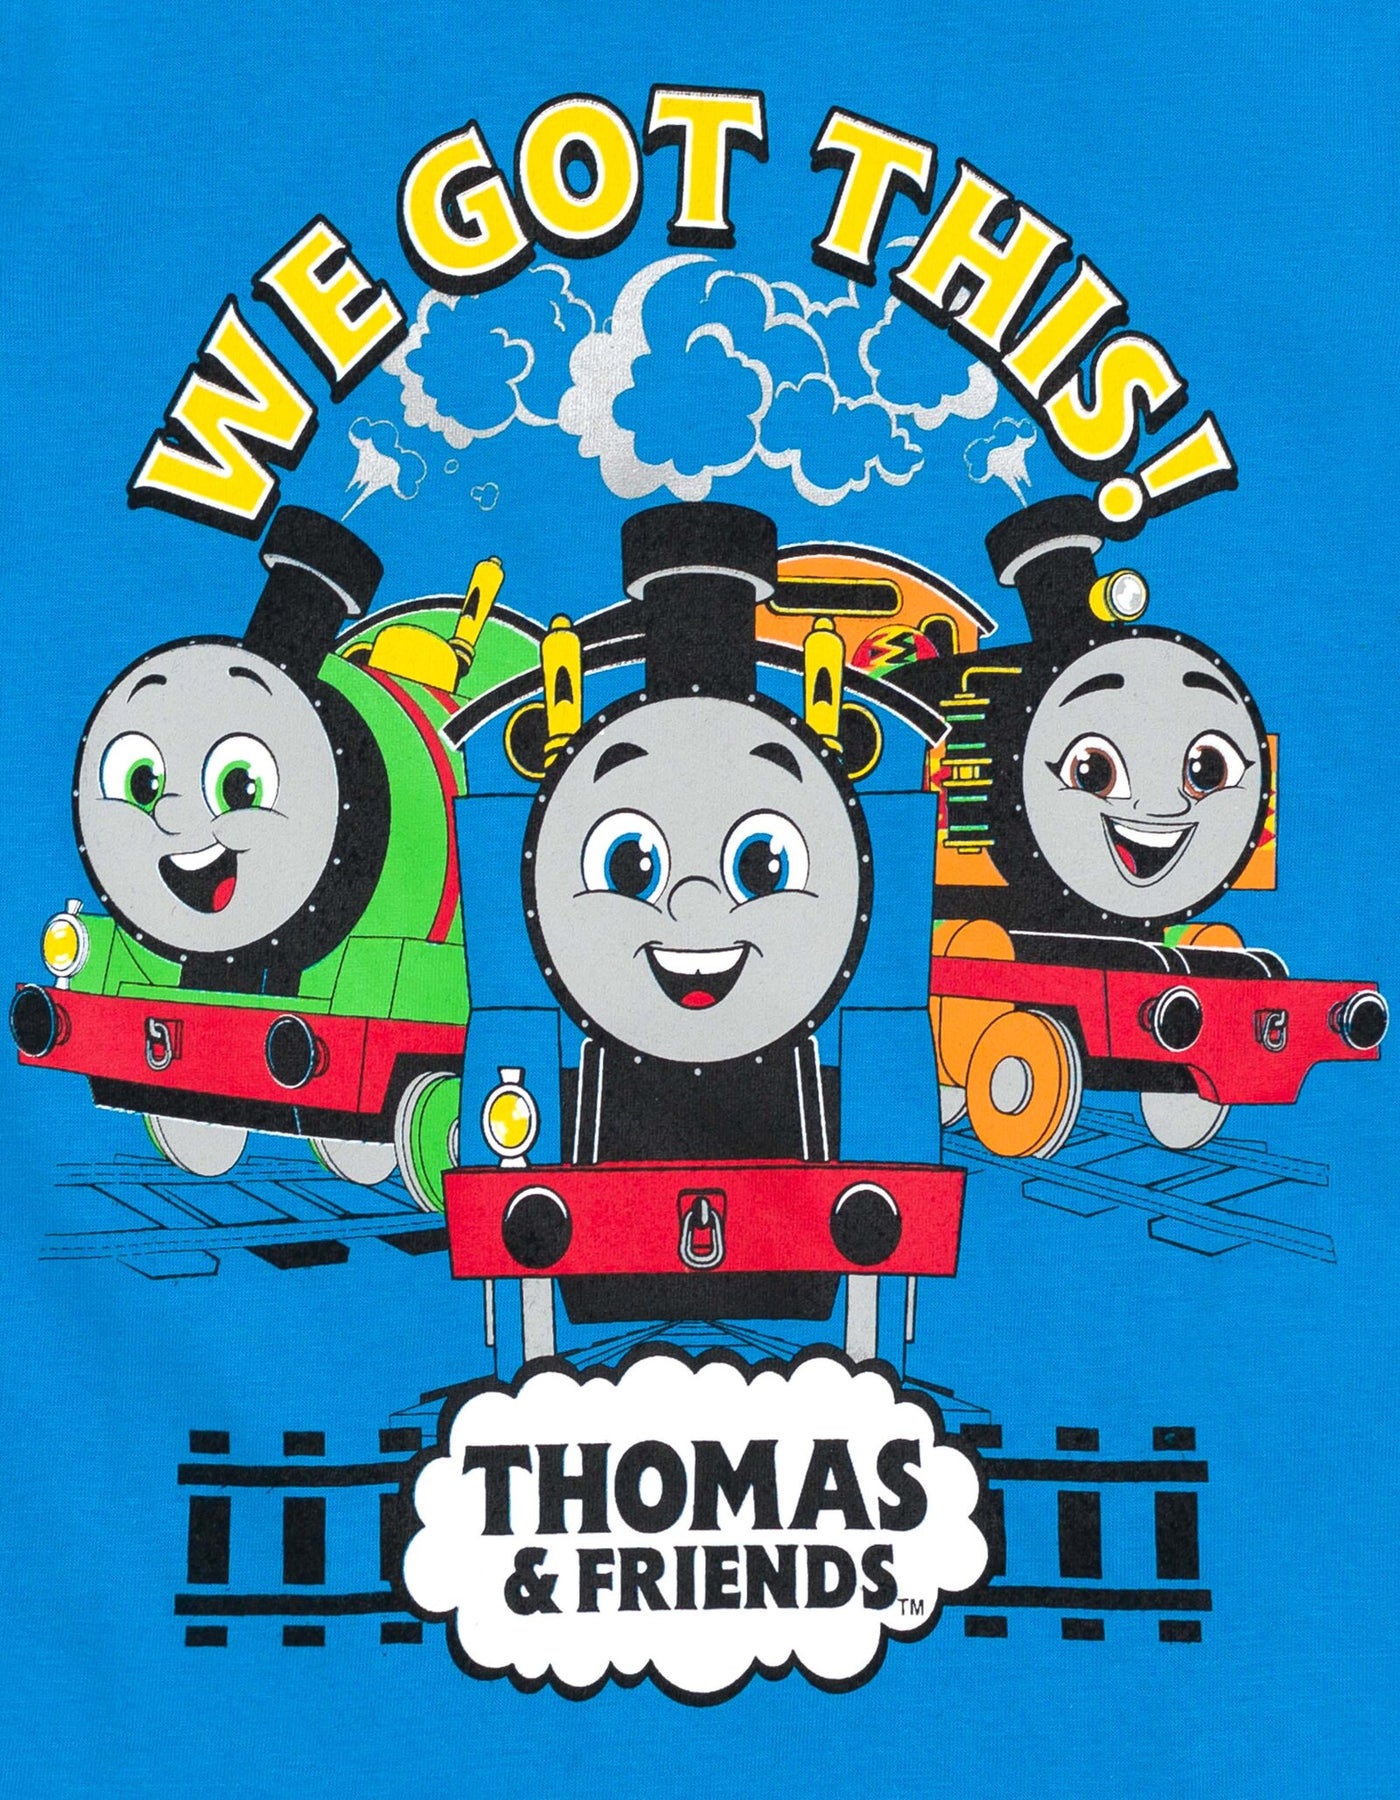 Thomas & Friends T-Shirt and Basketball Shorts Mesh Outfit Set